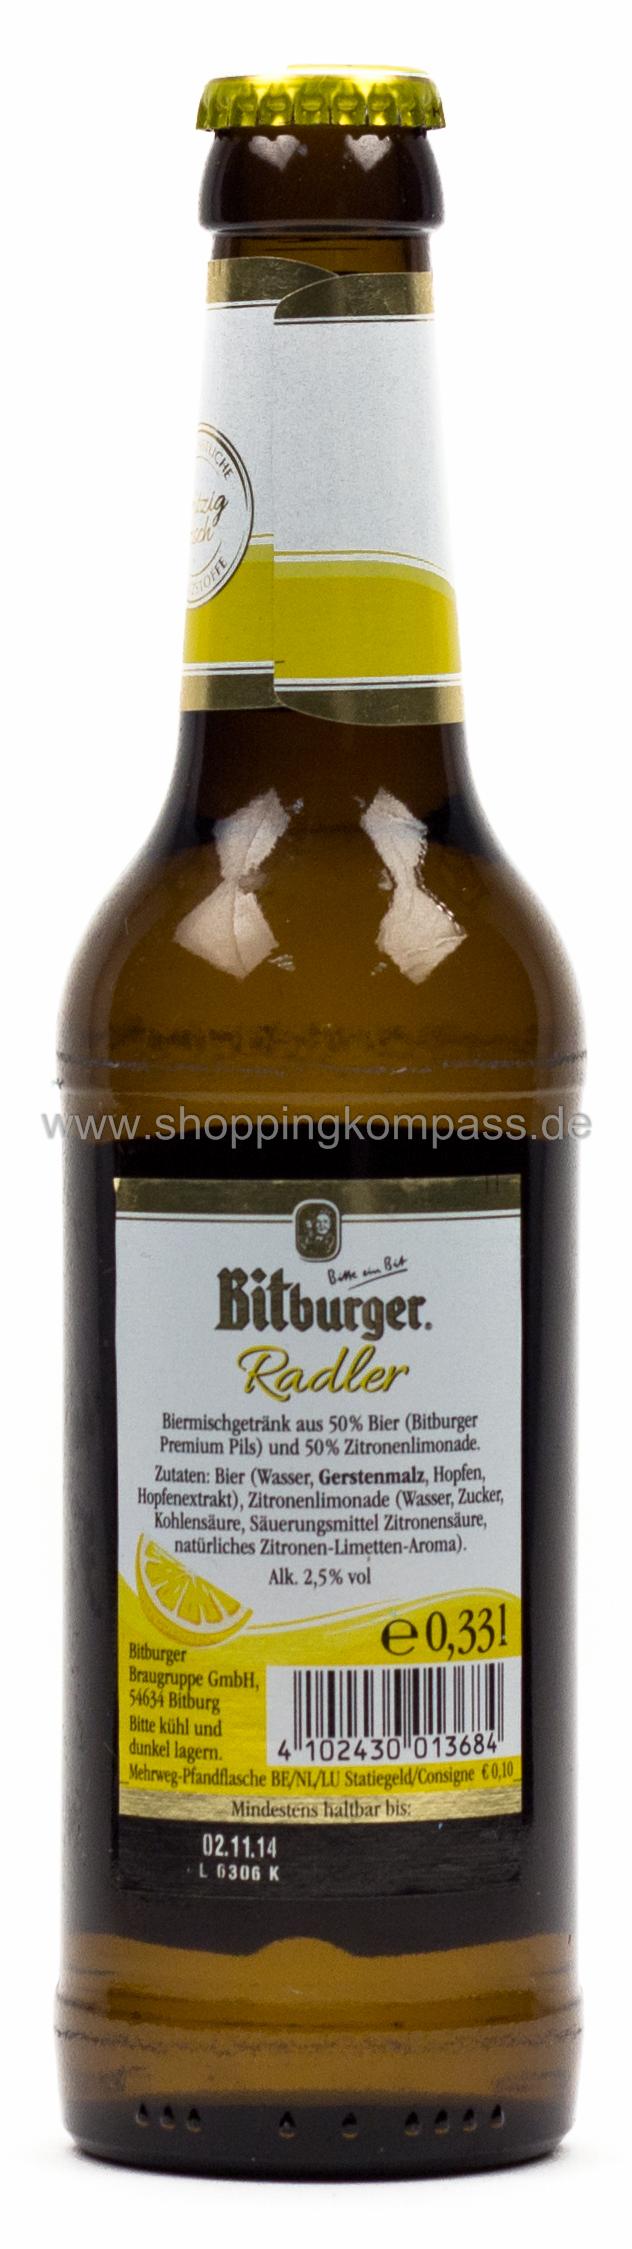 Bitburger Radler Kasten 24 x 0,33 l Glas Mehrweg